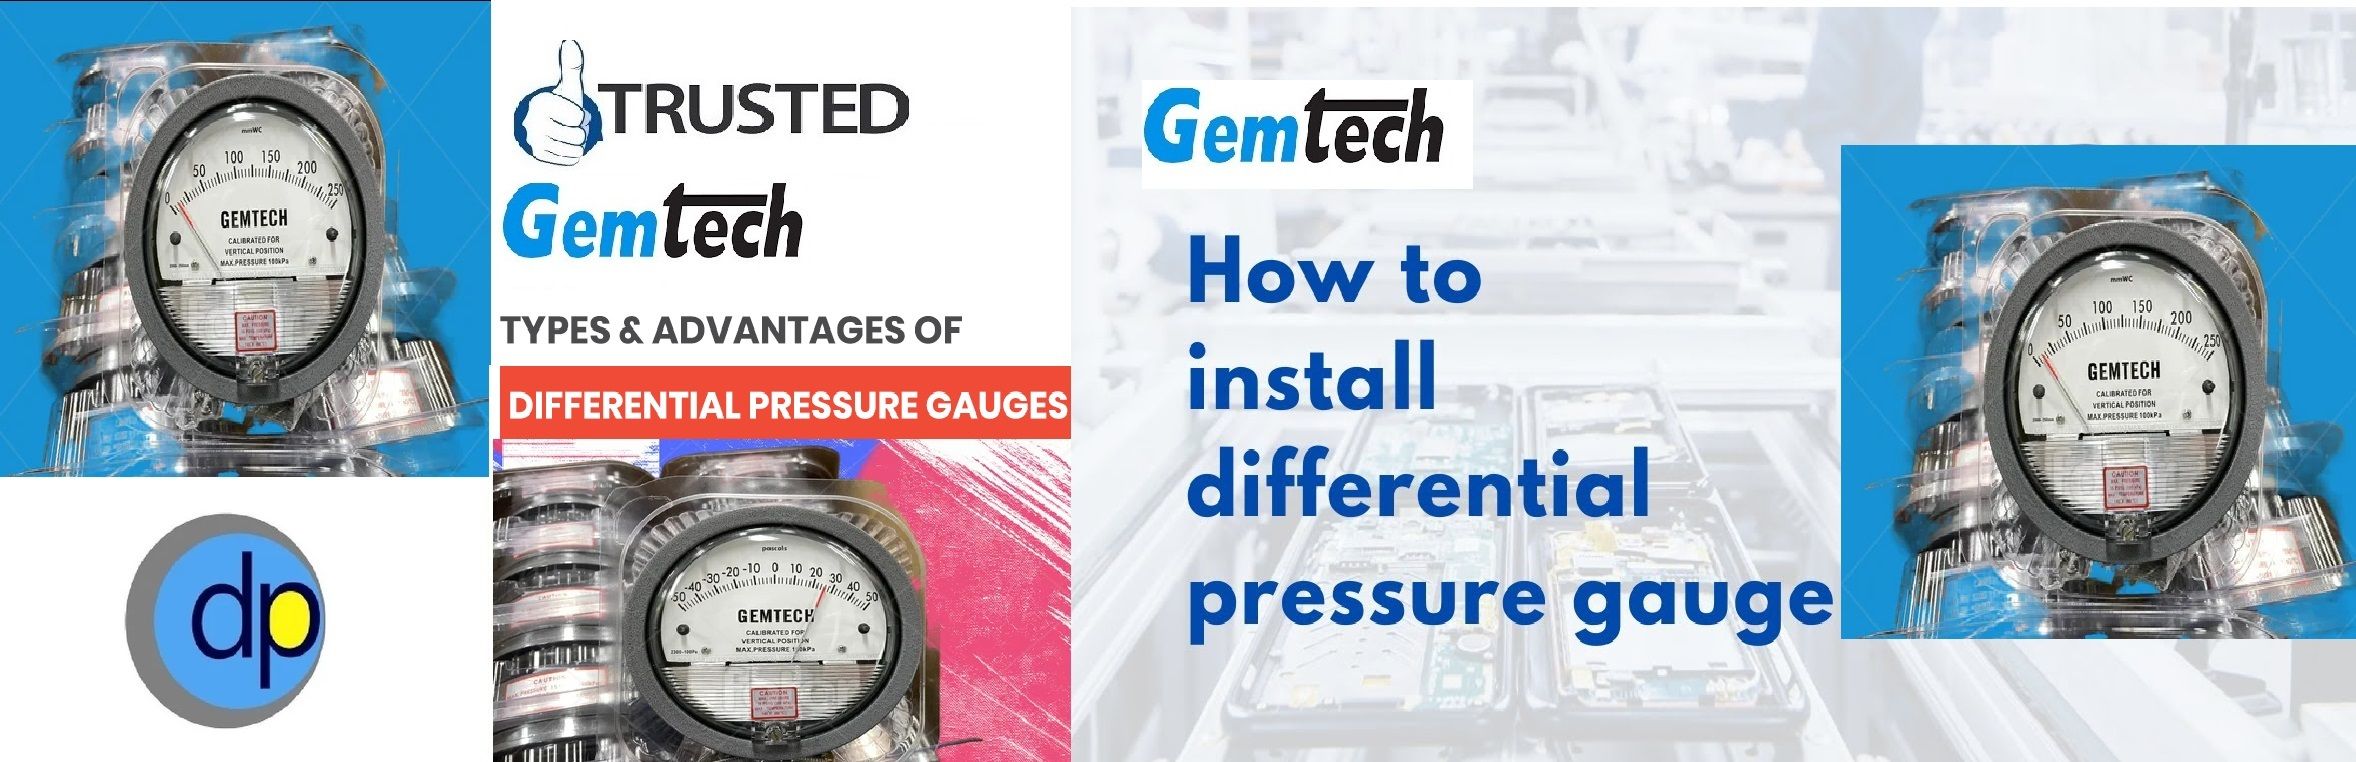 Model G2300-20 CM Gemtech Differential pressure Gauges by Range 0-20 CM wc